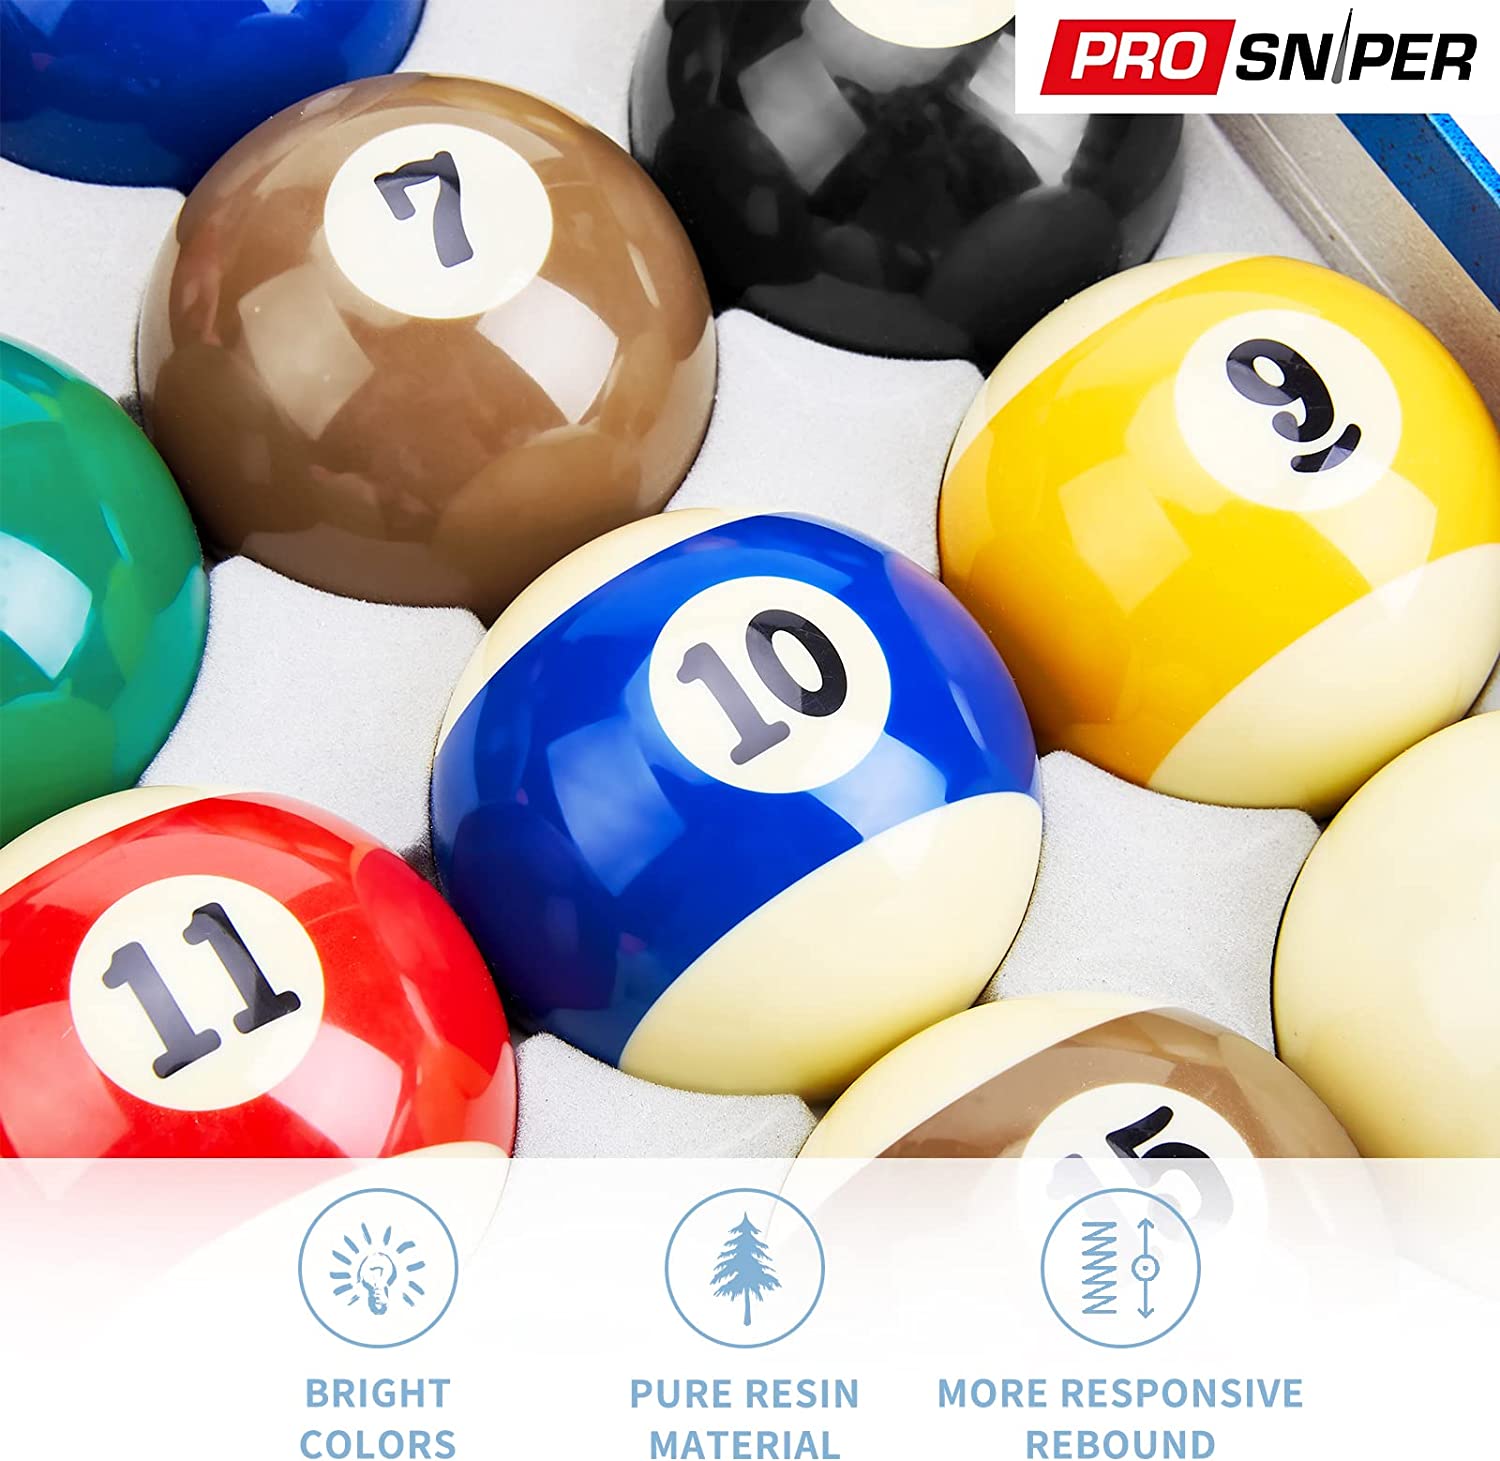  JAPER BEES Deluxe Billiard Ball/Pool Ball Set Complete 16balls  Regulation Size&Weight Resin Ball : Sports & Outdoors